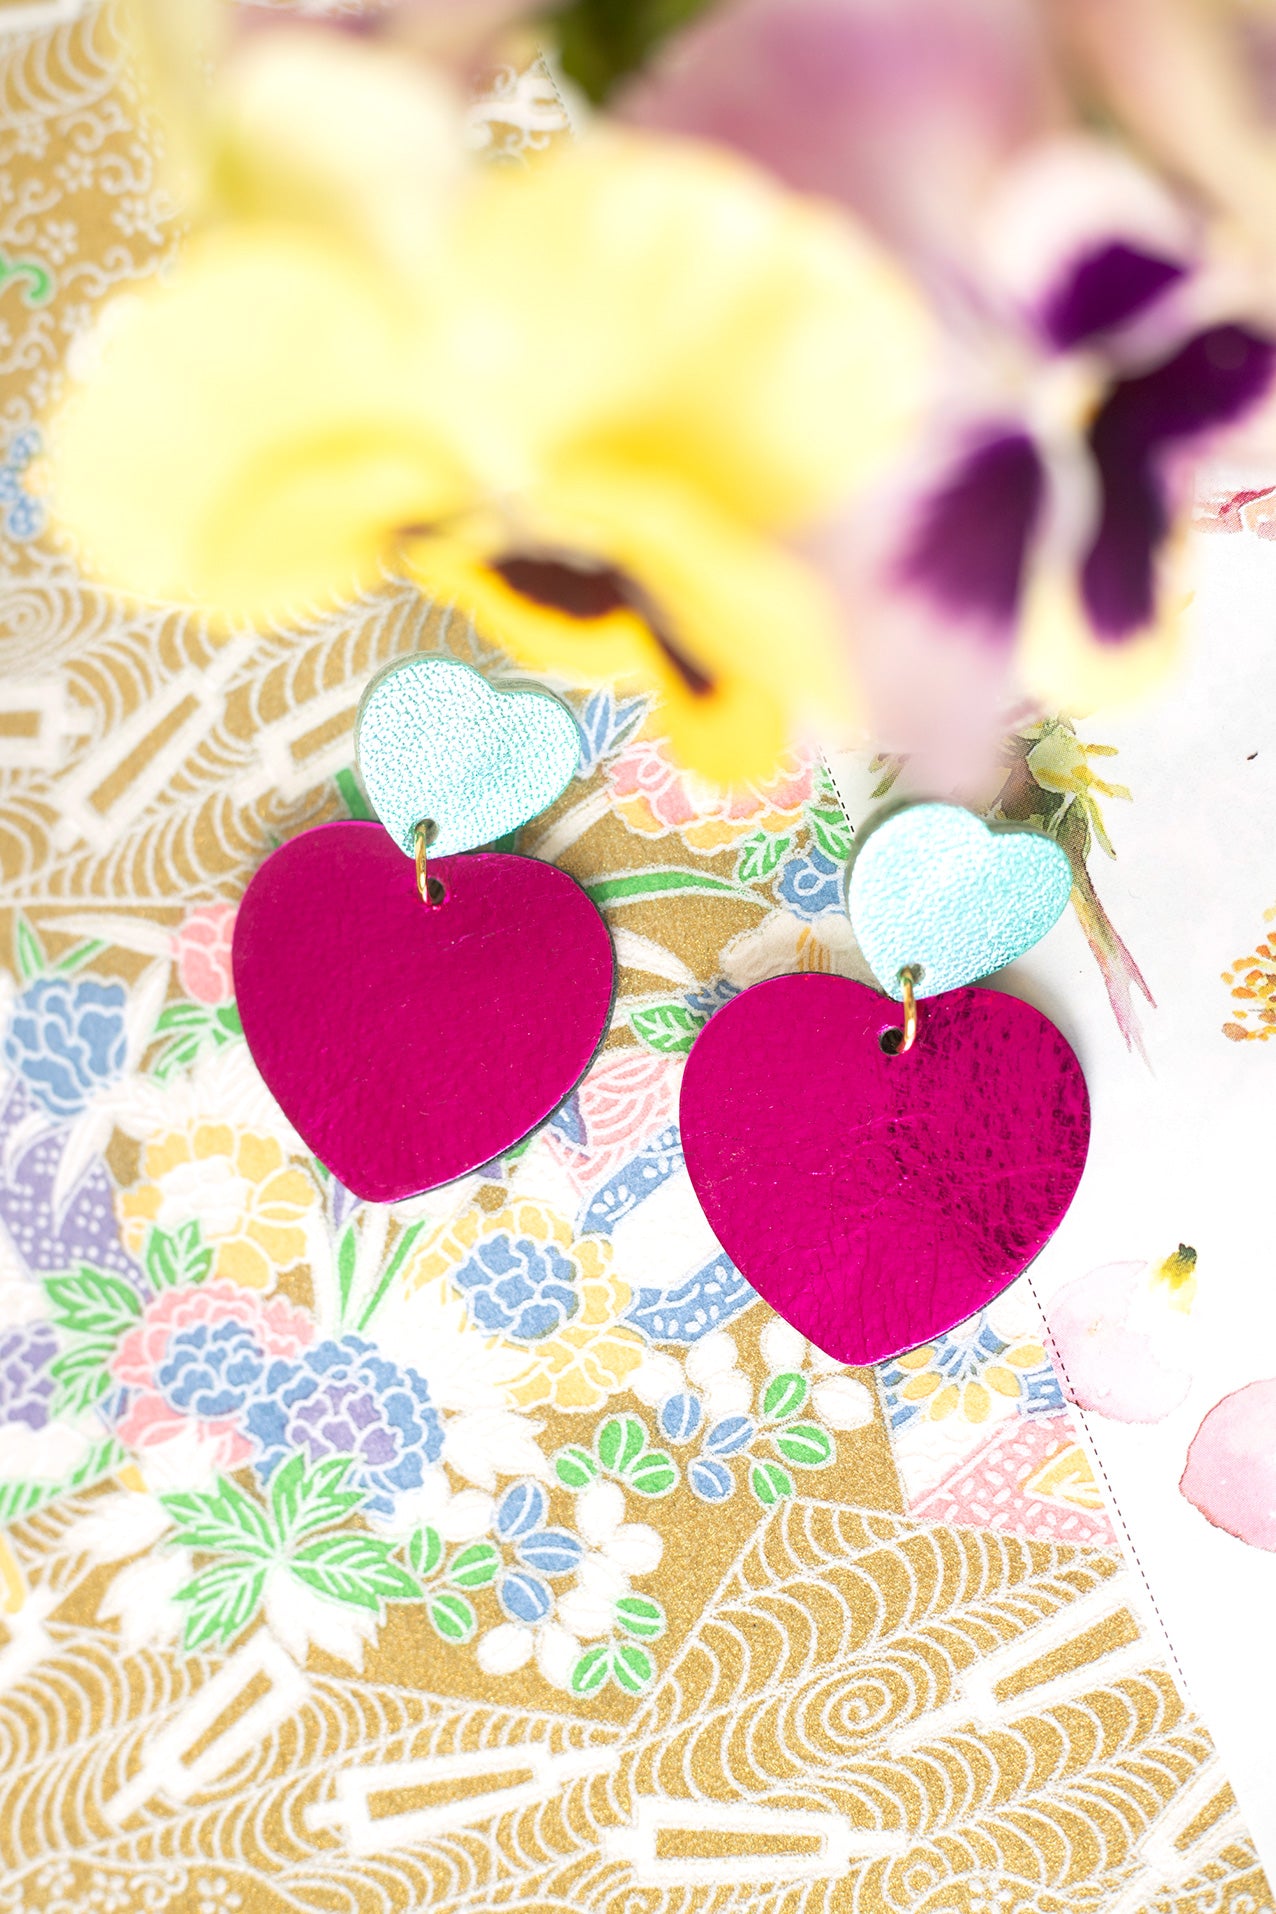 Double heart earrings fuchsia pink and metallic turquoise blue